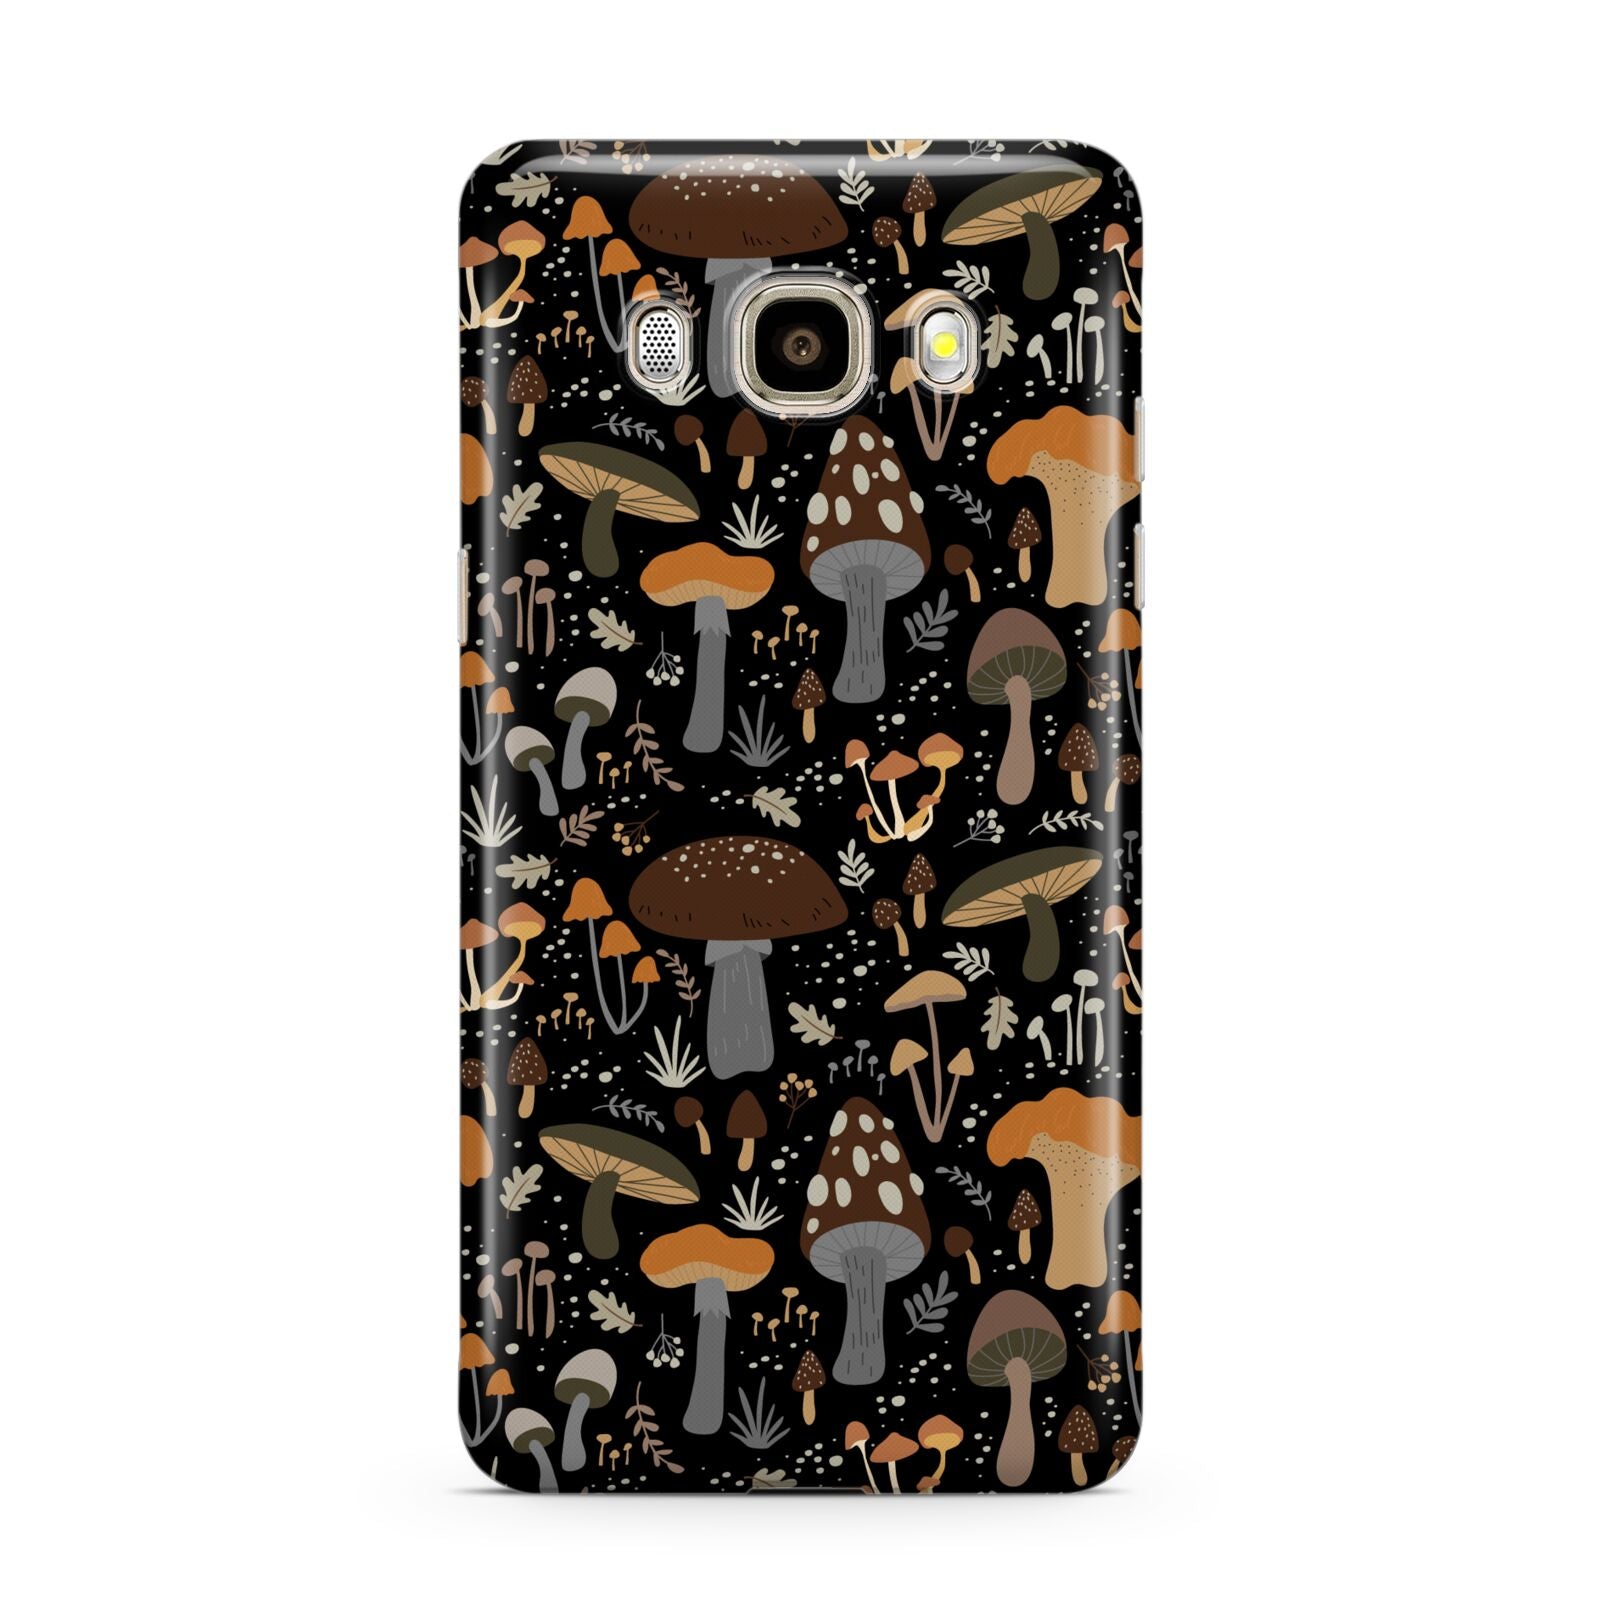 Mushroom Samsung Galaxy J7 2016 Case on gold phone